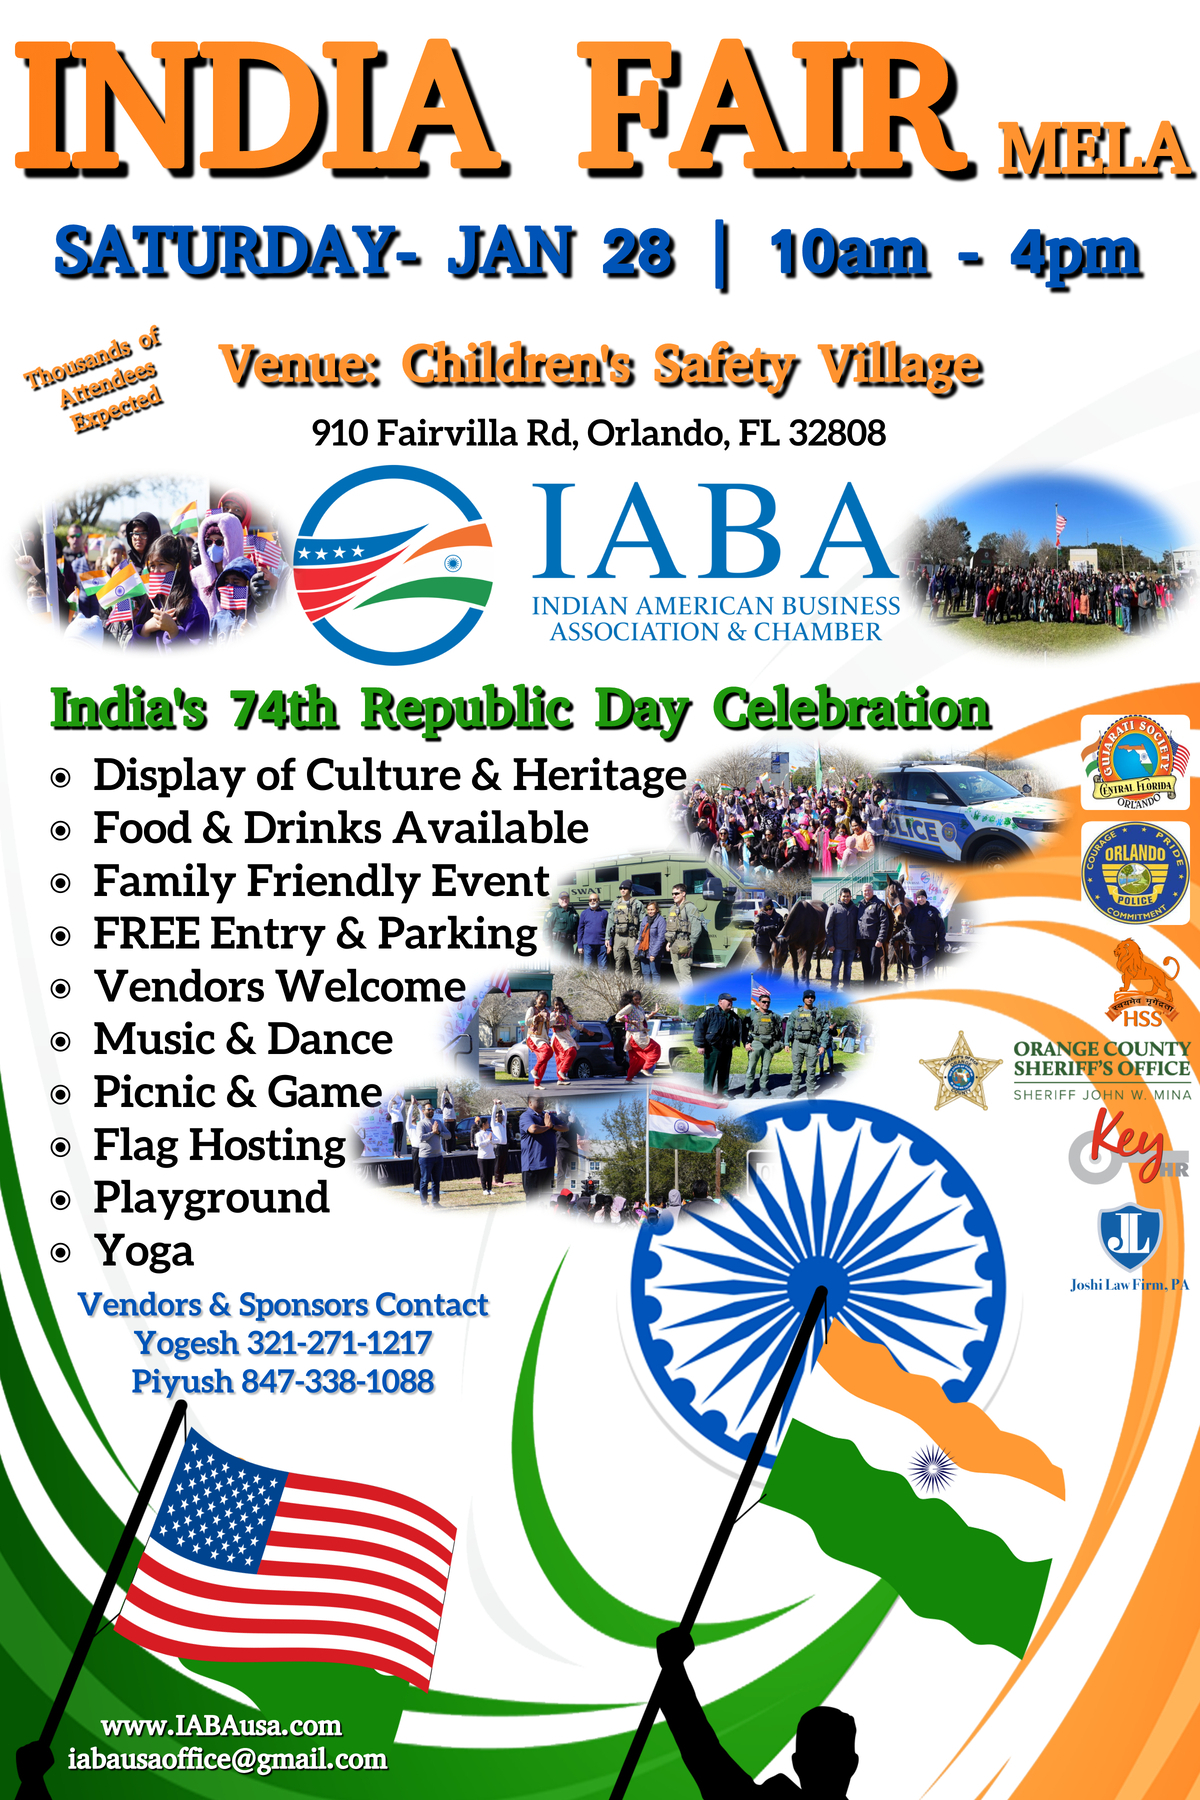 IABA India Fair (Mela) Jan 28th, 2023 (Saturday)- India's 74th Republic Day & Cultural Celebration